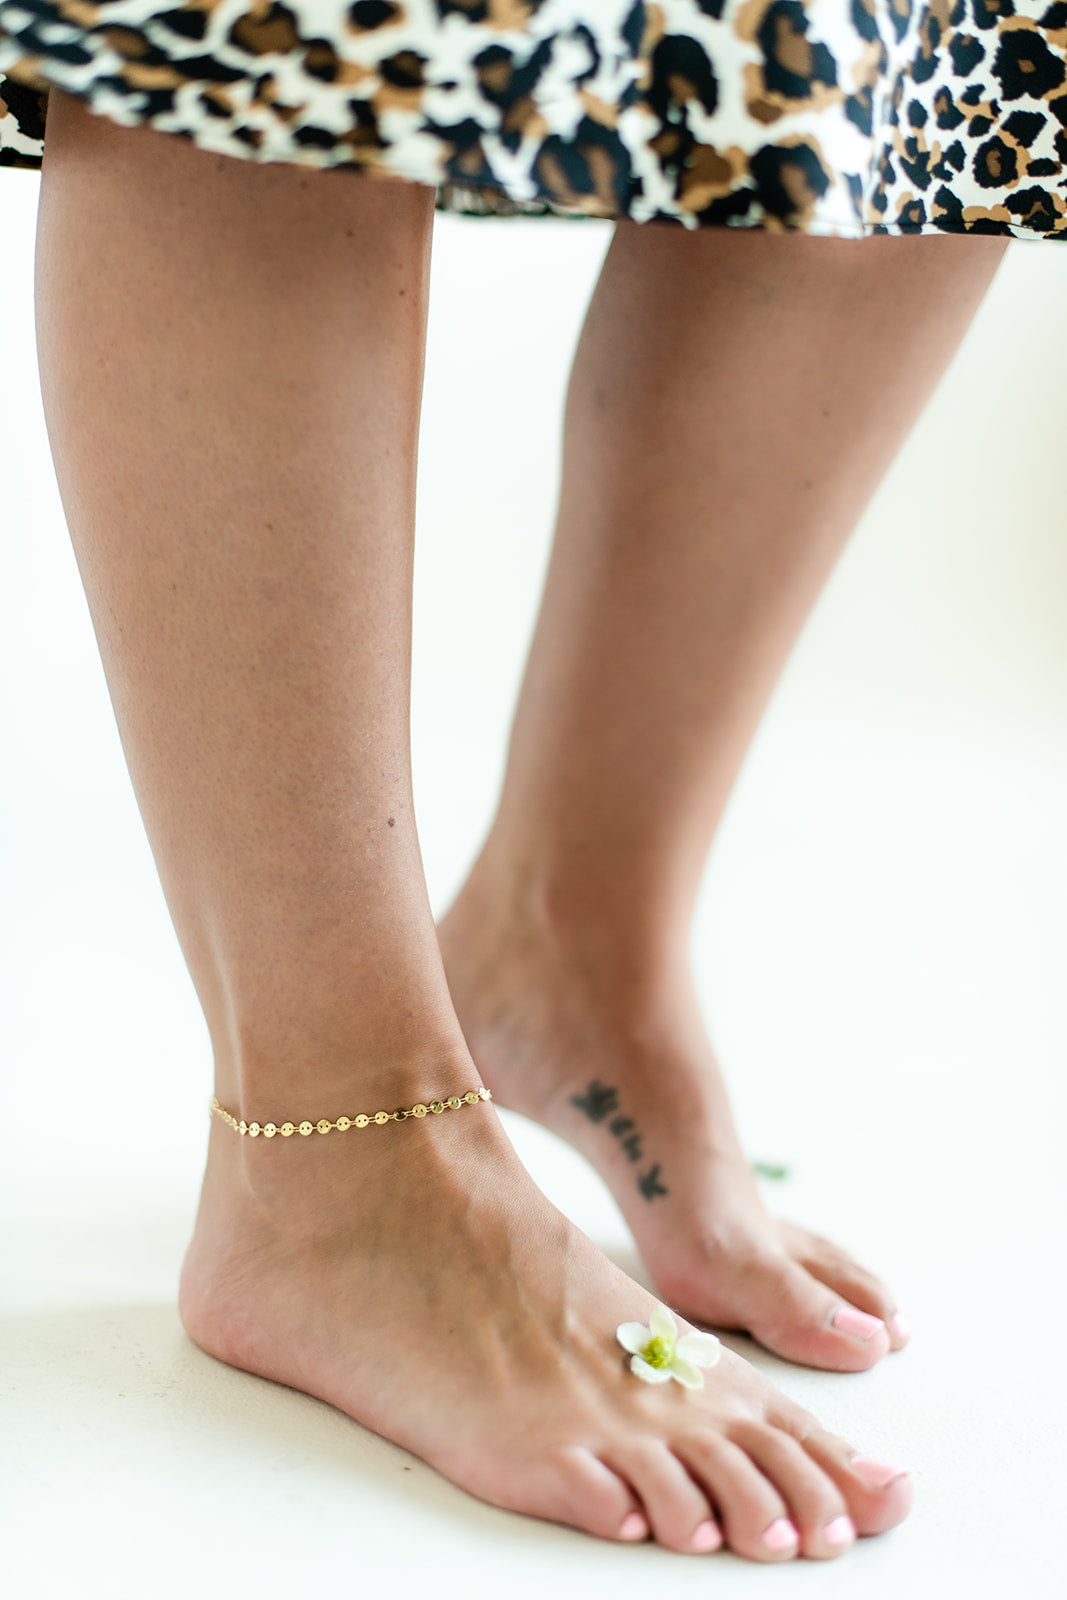 Herringbone Anklet